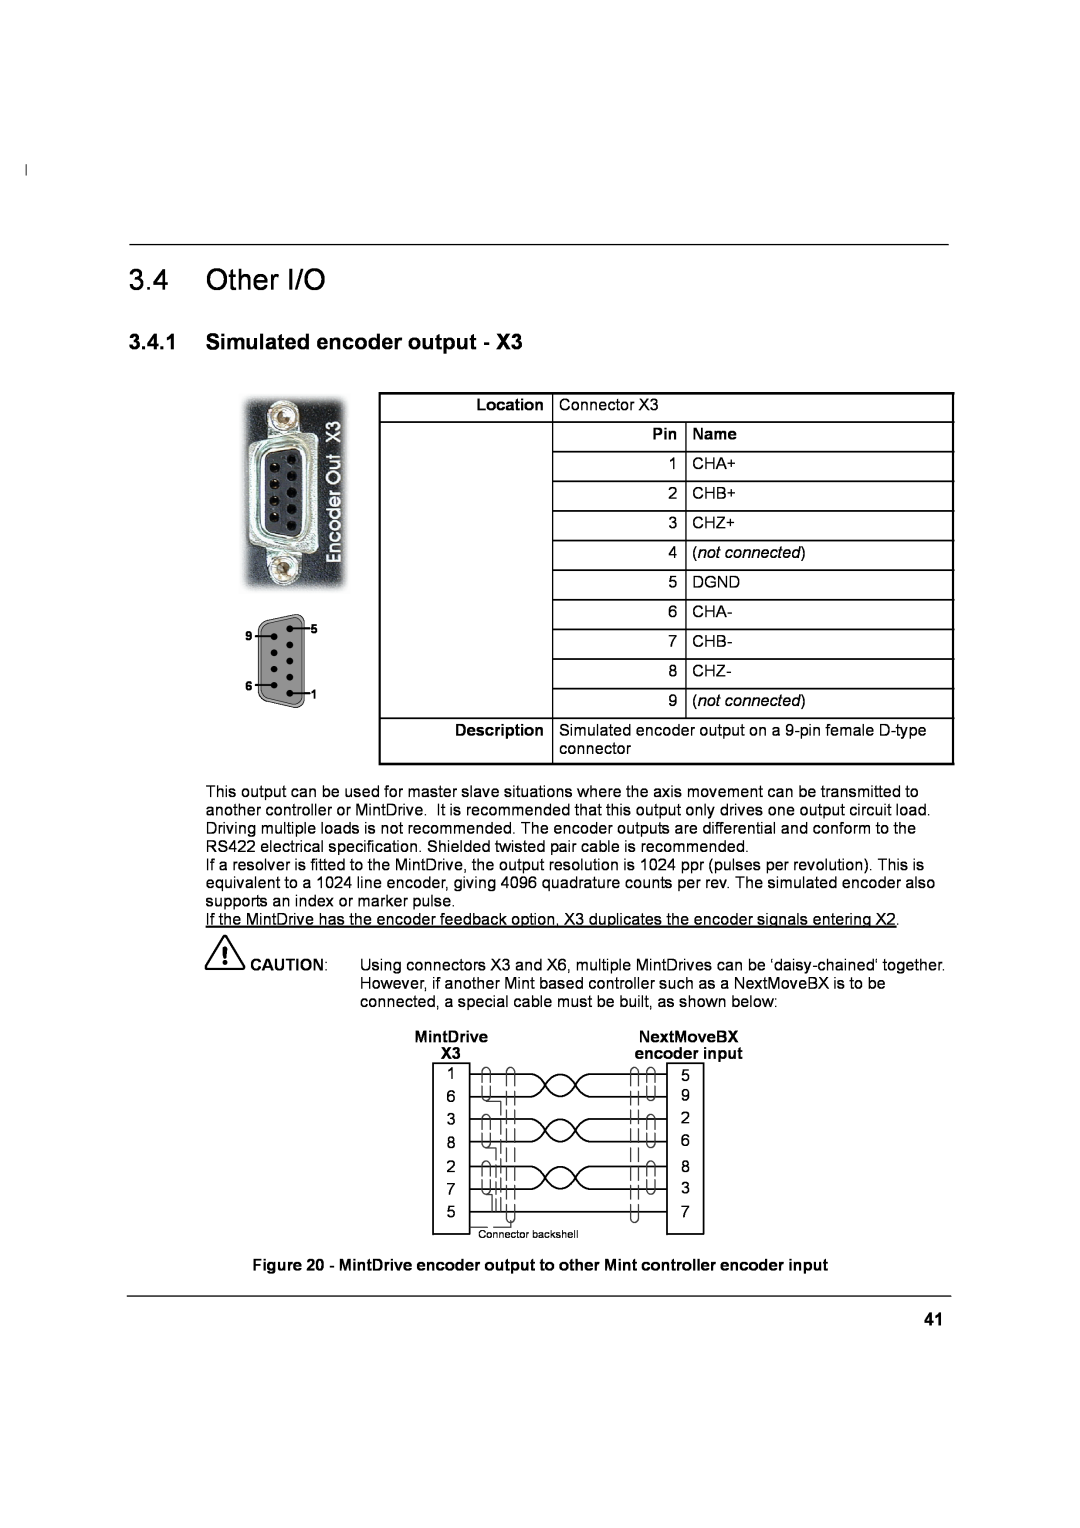 Baldor MN1274 06/2001 installation manual Other I/O, Simulated encoder output 